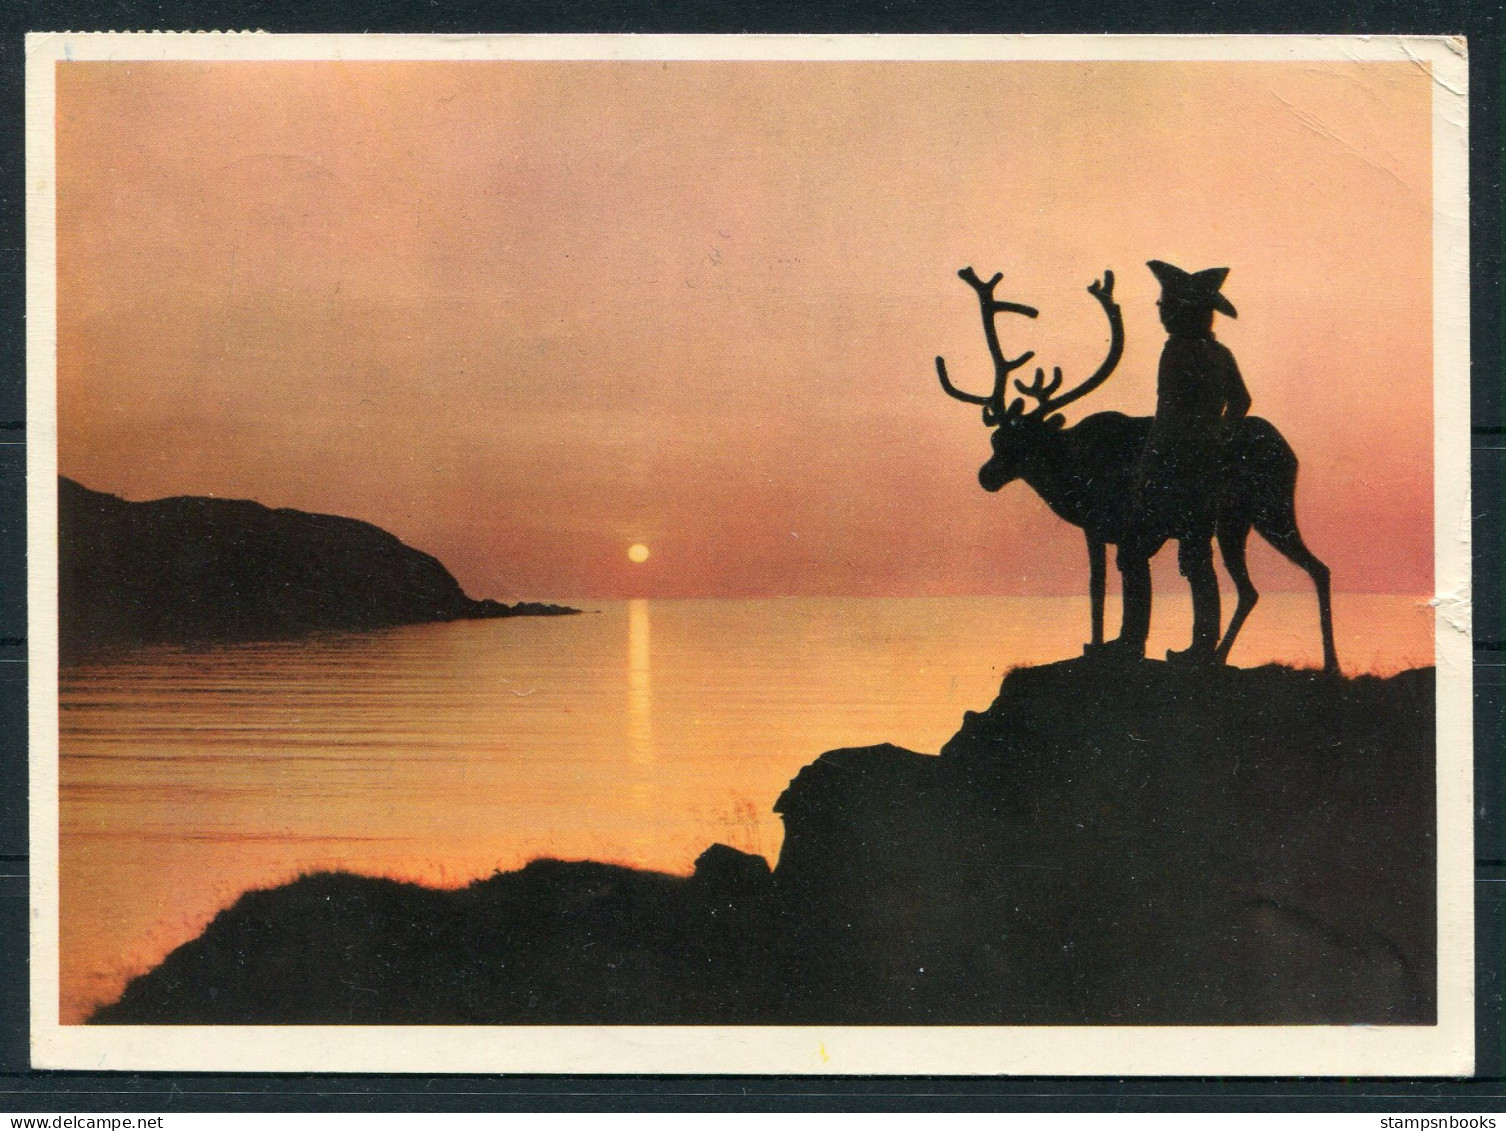 1960 Norway Arctic Circle, Polarsirkelen Postcard - Holland. Nordkap 35ore + Svalbard Jan Mayen I.G.Y. Polar Franking - Covers & Documents